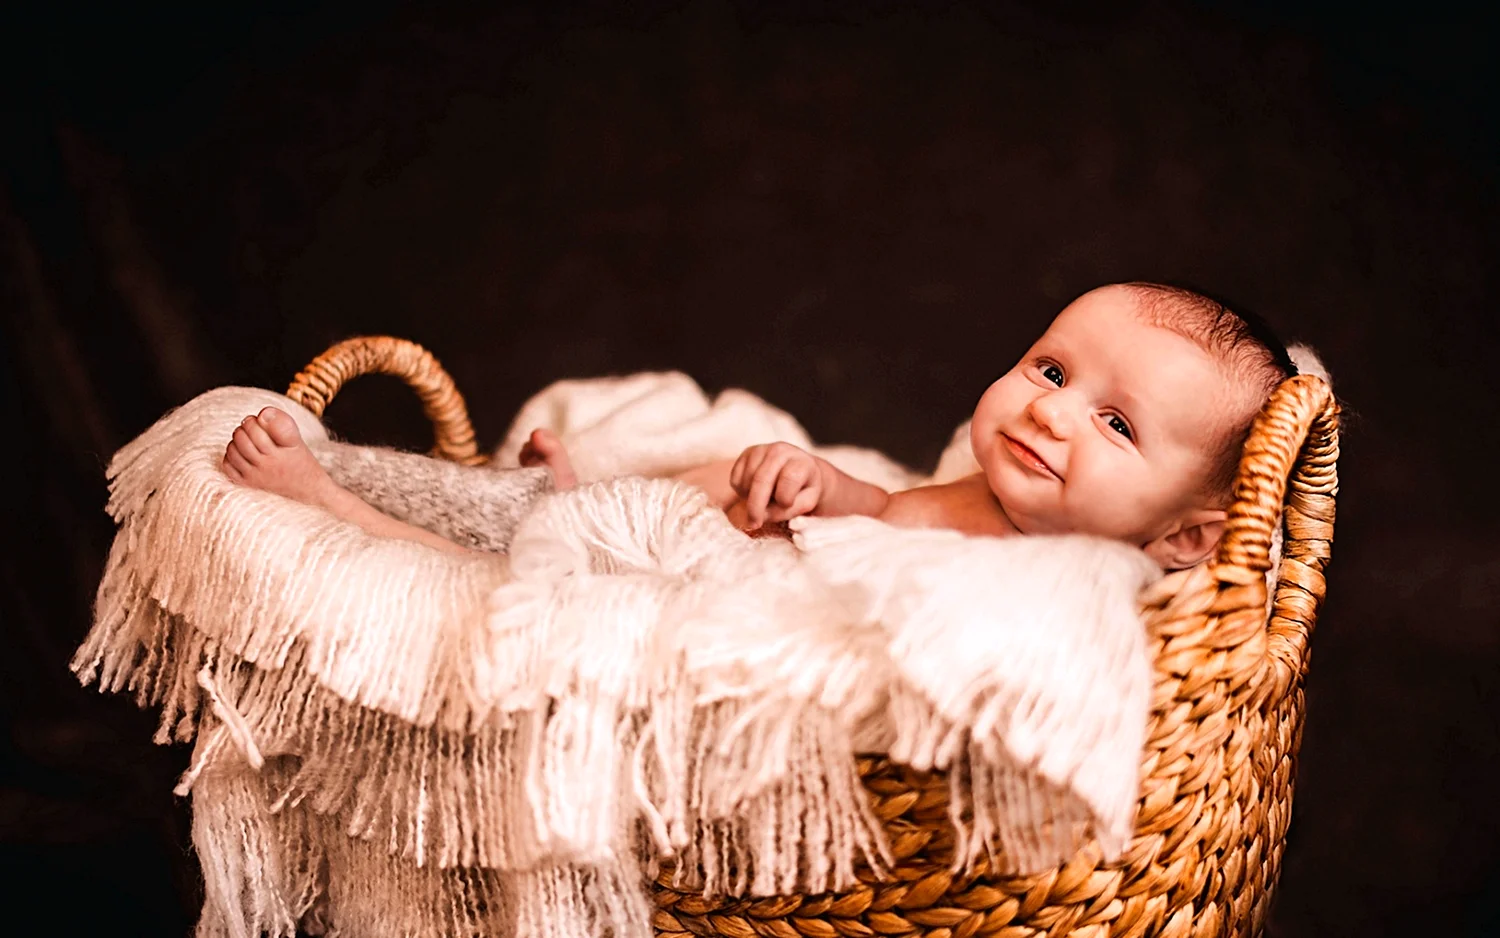 Фотосессия младенца в корзине